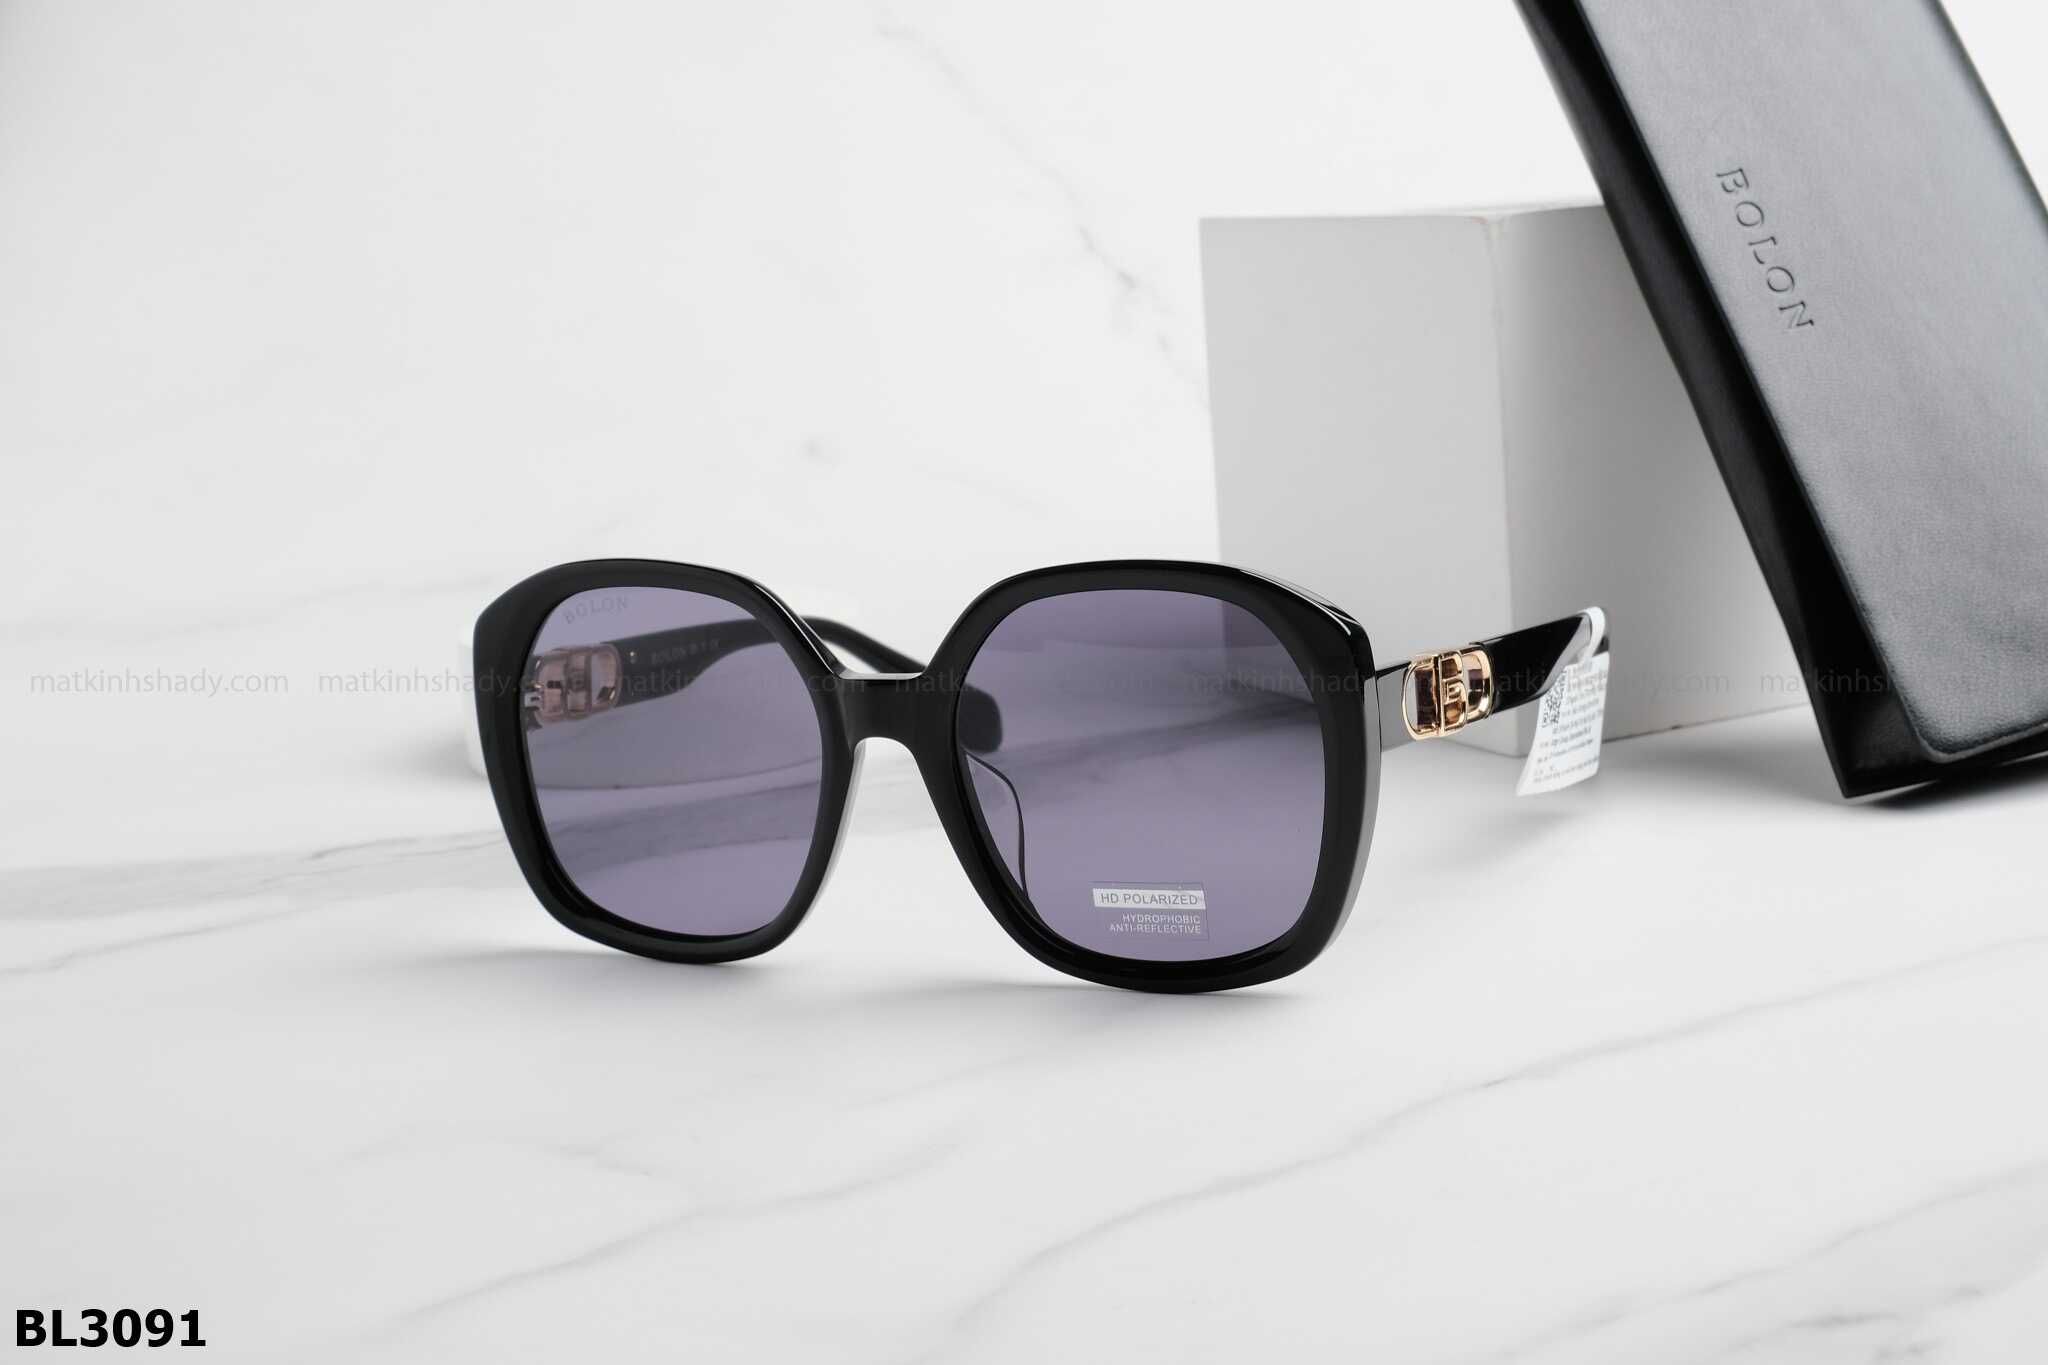  Bolon Eyewear - Sunglasses - BL3091 